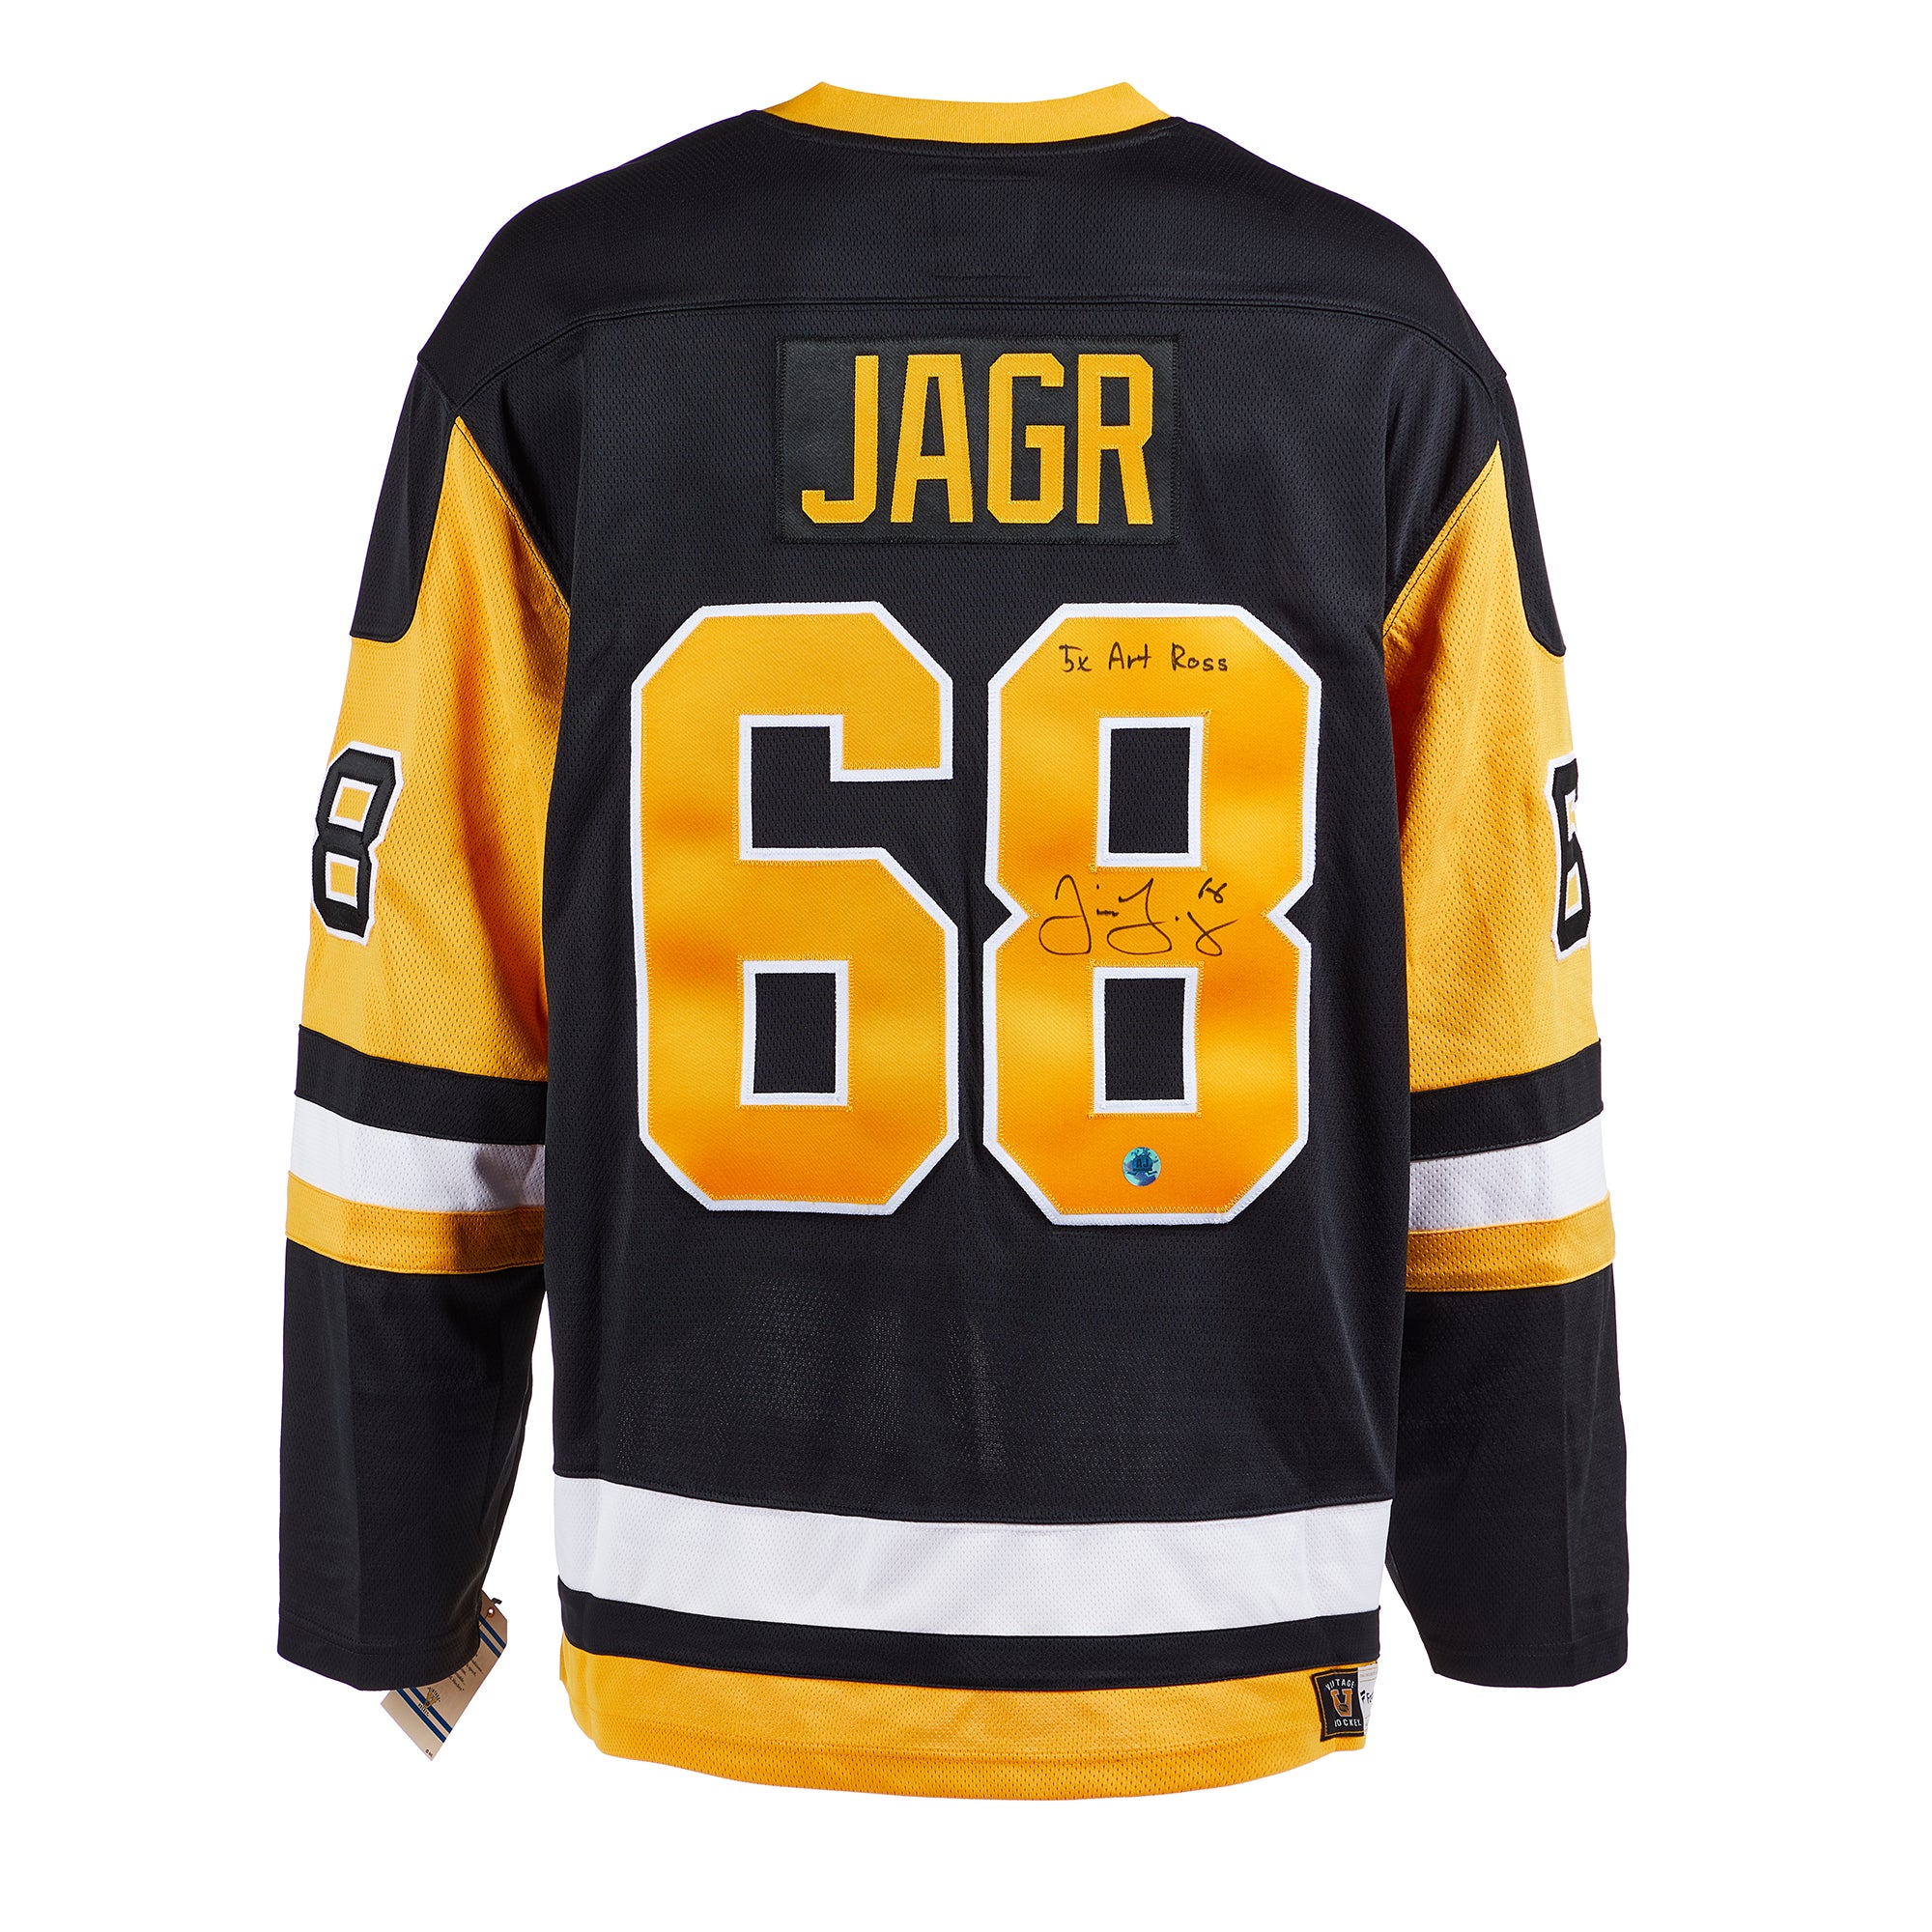 Jaromir Jagr Pittsburgh Penguins Fanatics Authentic Autographed Logo Hockey  Puck